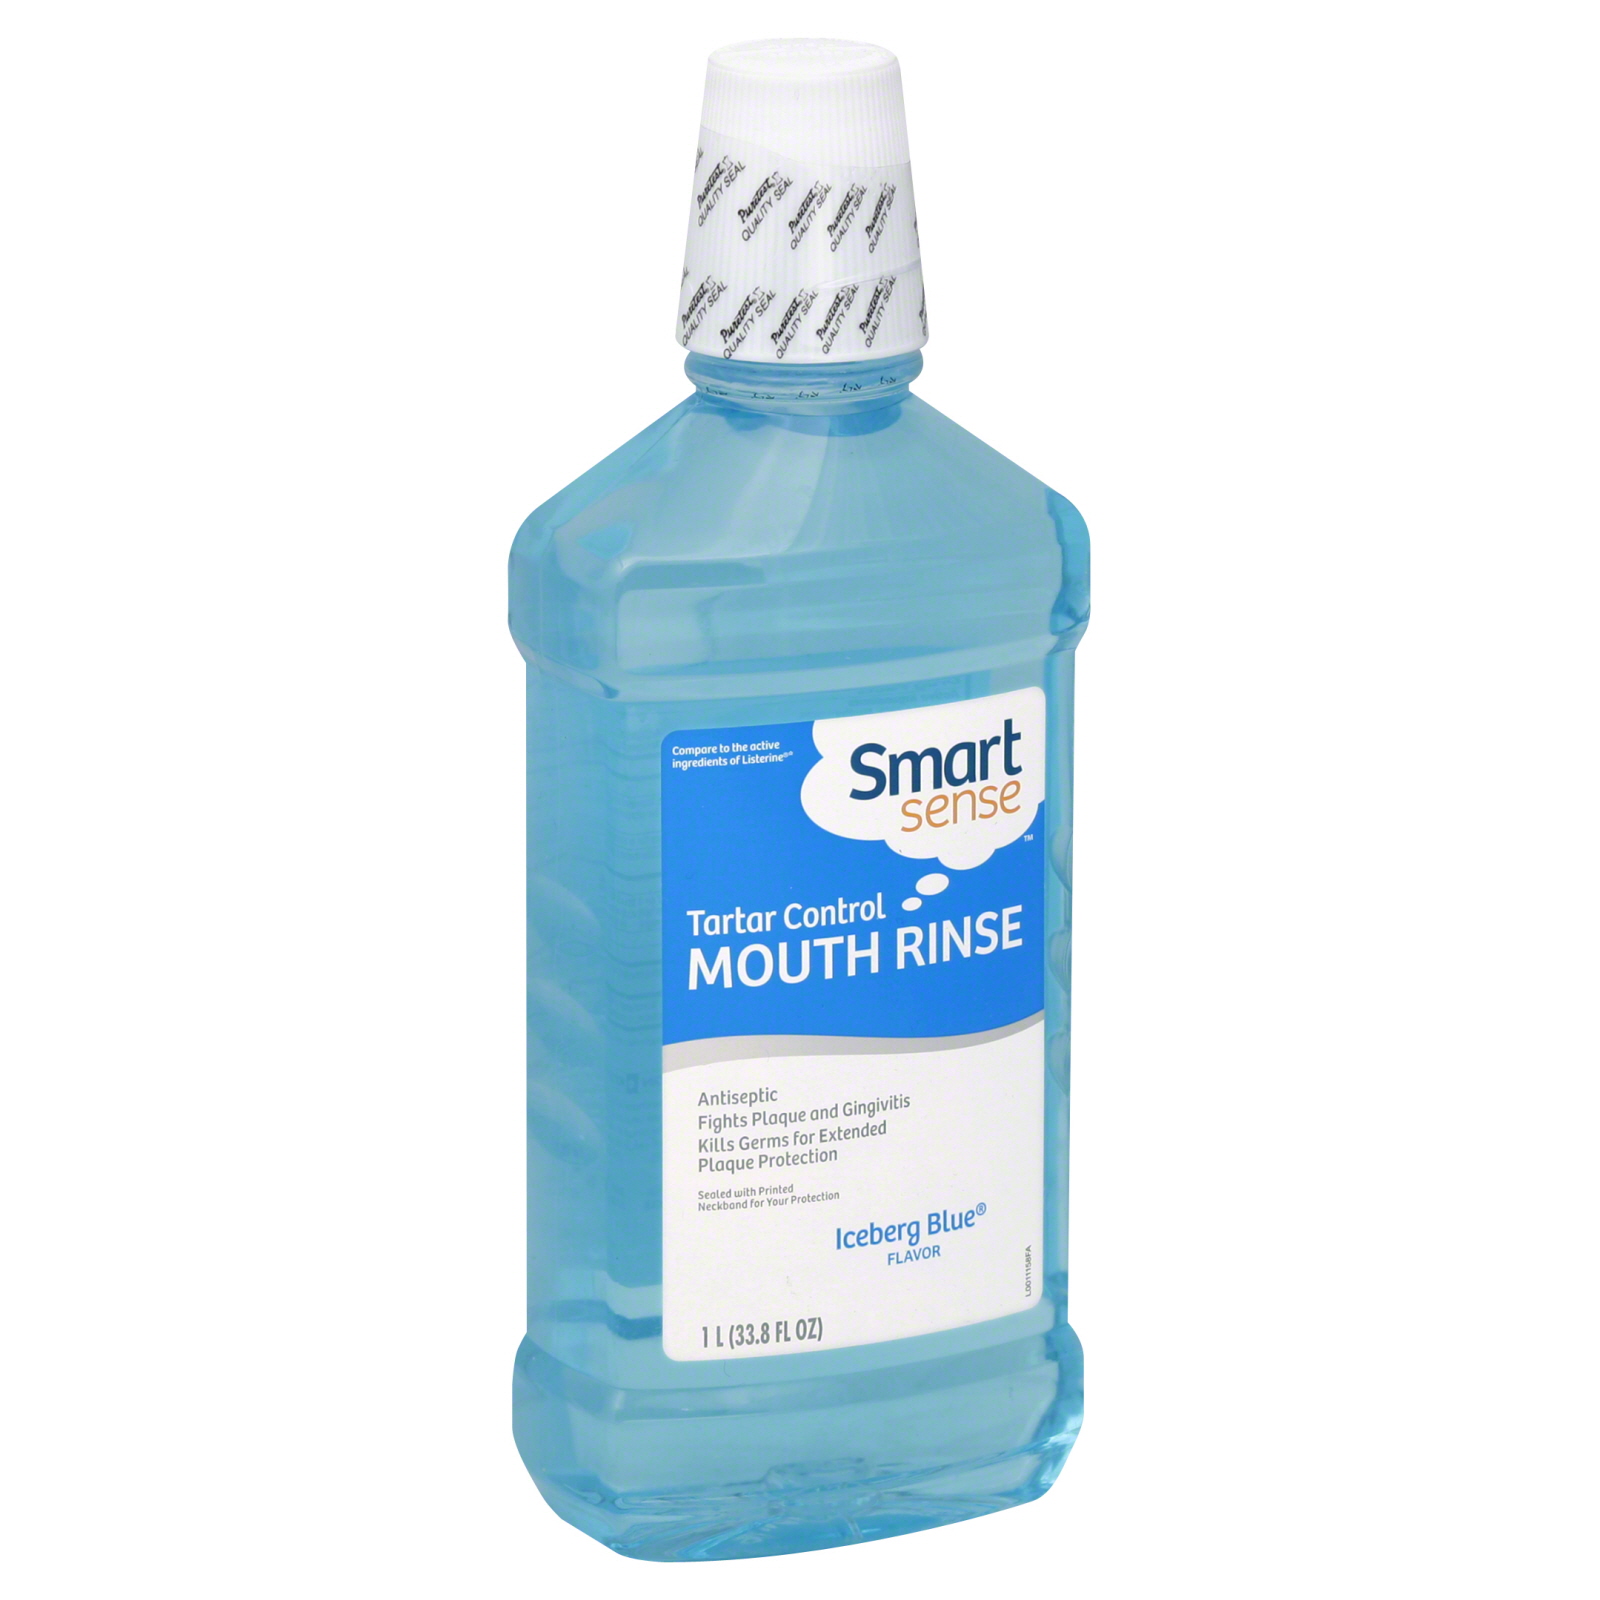 Smart Sense Mouth Rinse, Tartar Control, Iceberg Blue Flavor 33.8 fl oz (1 lt)